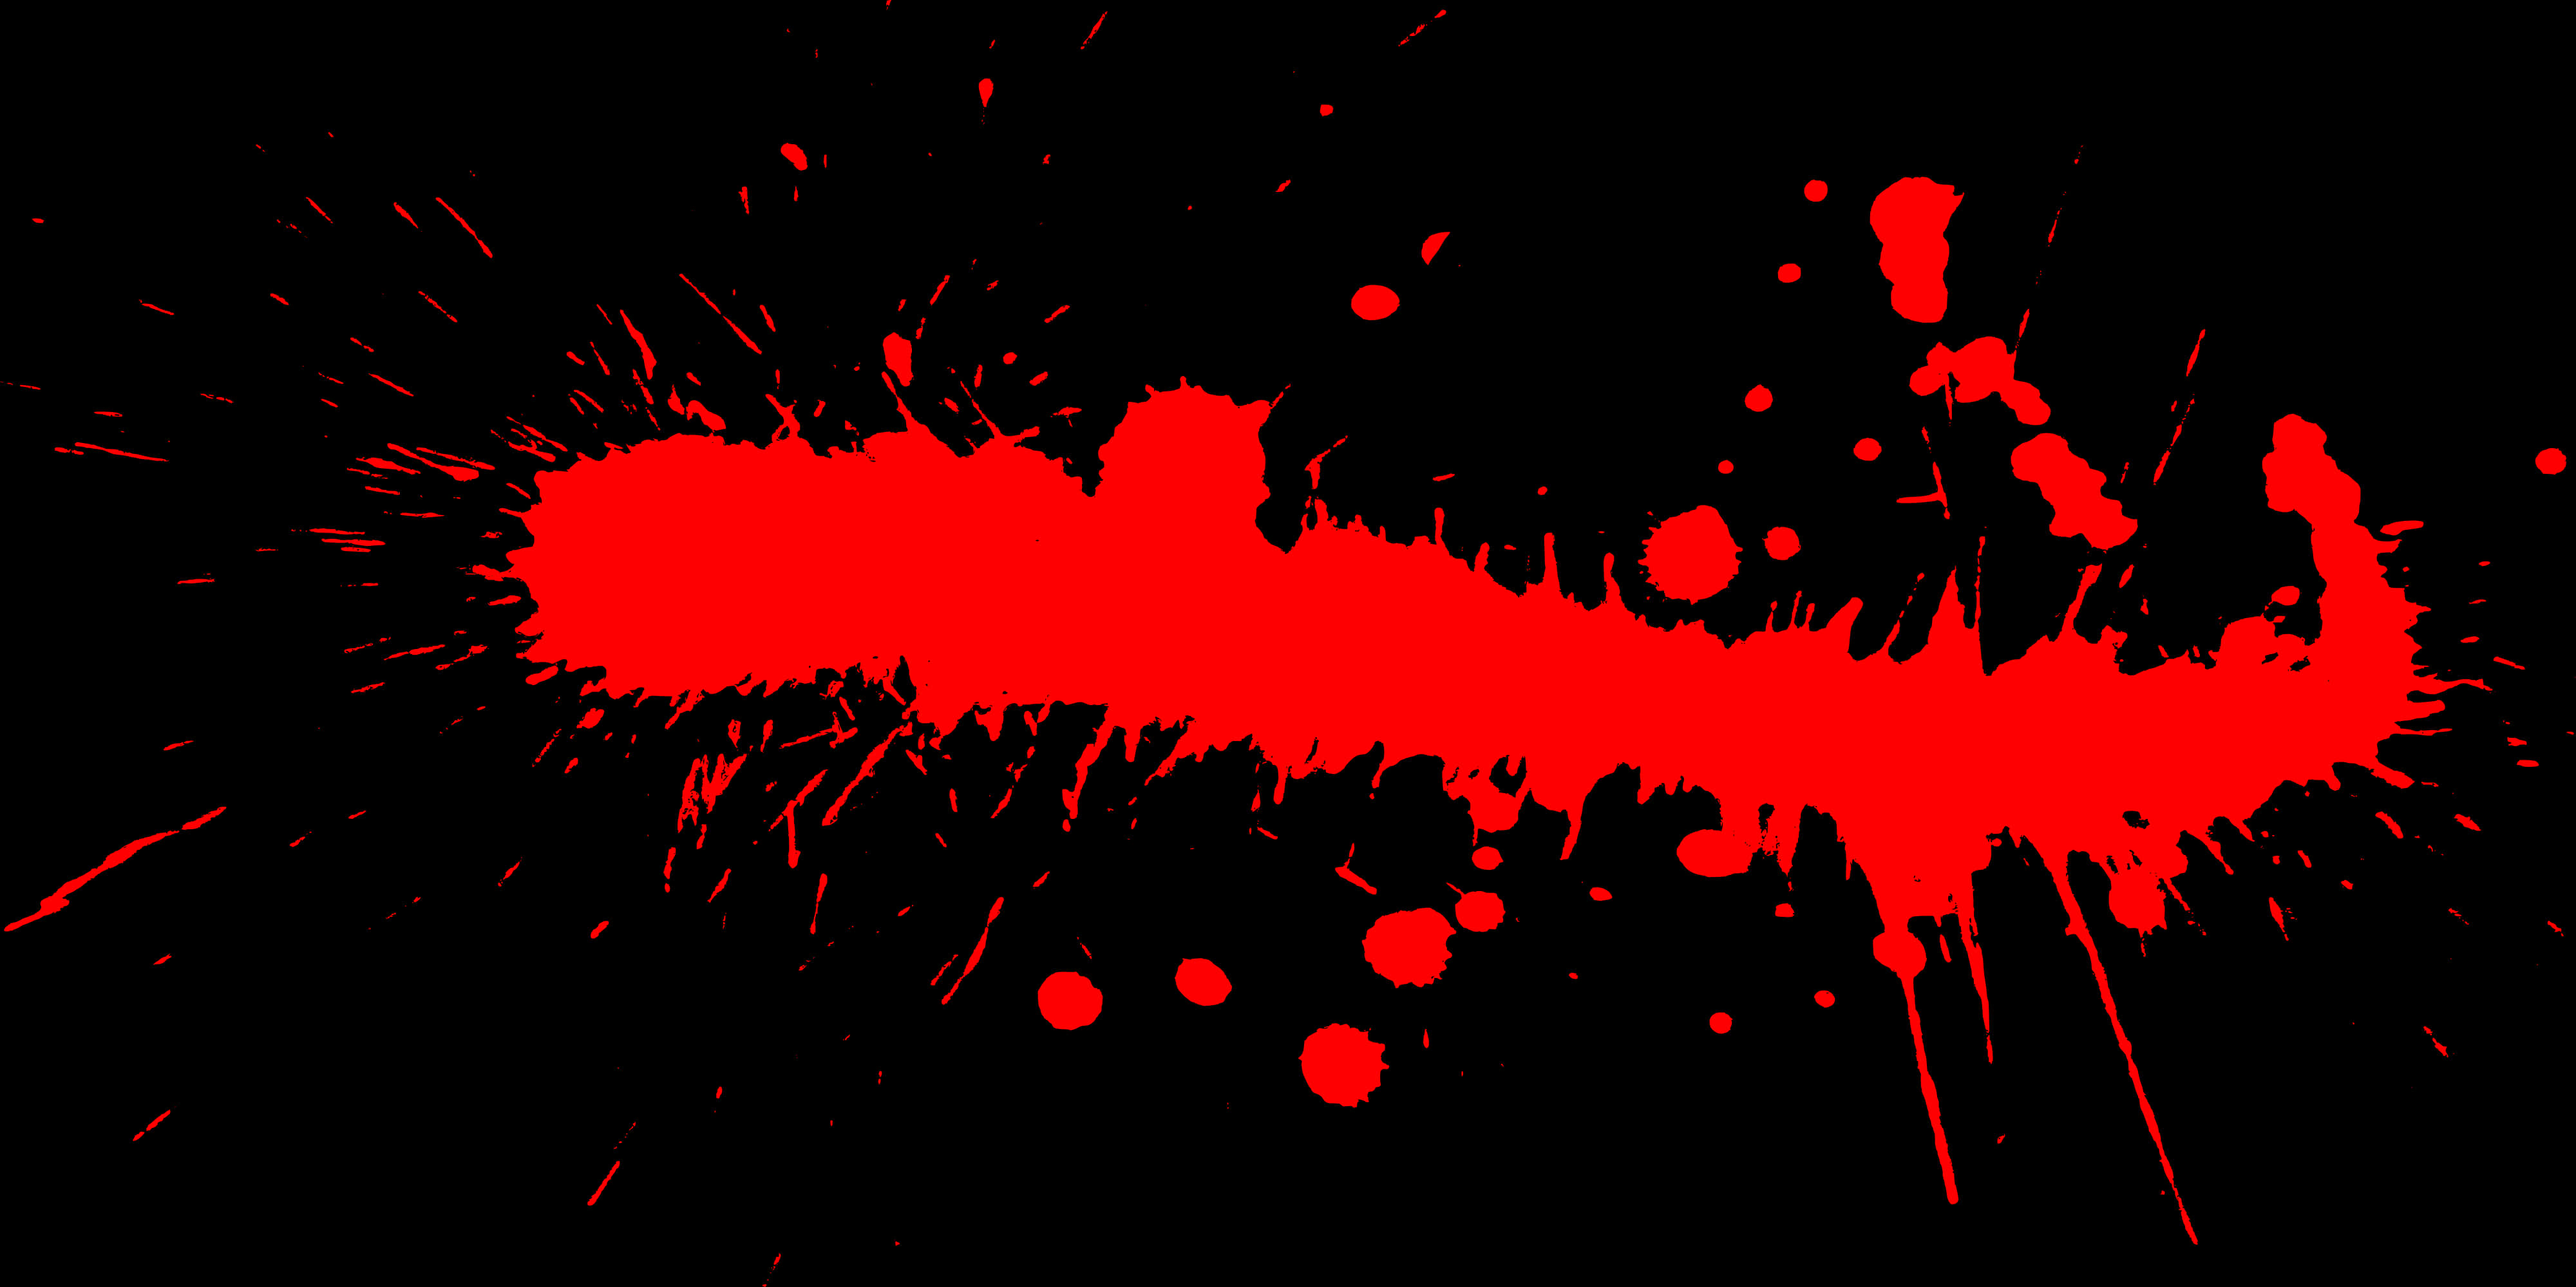 Red Paint Splatter On A Black Background